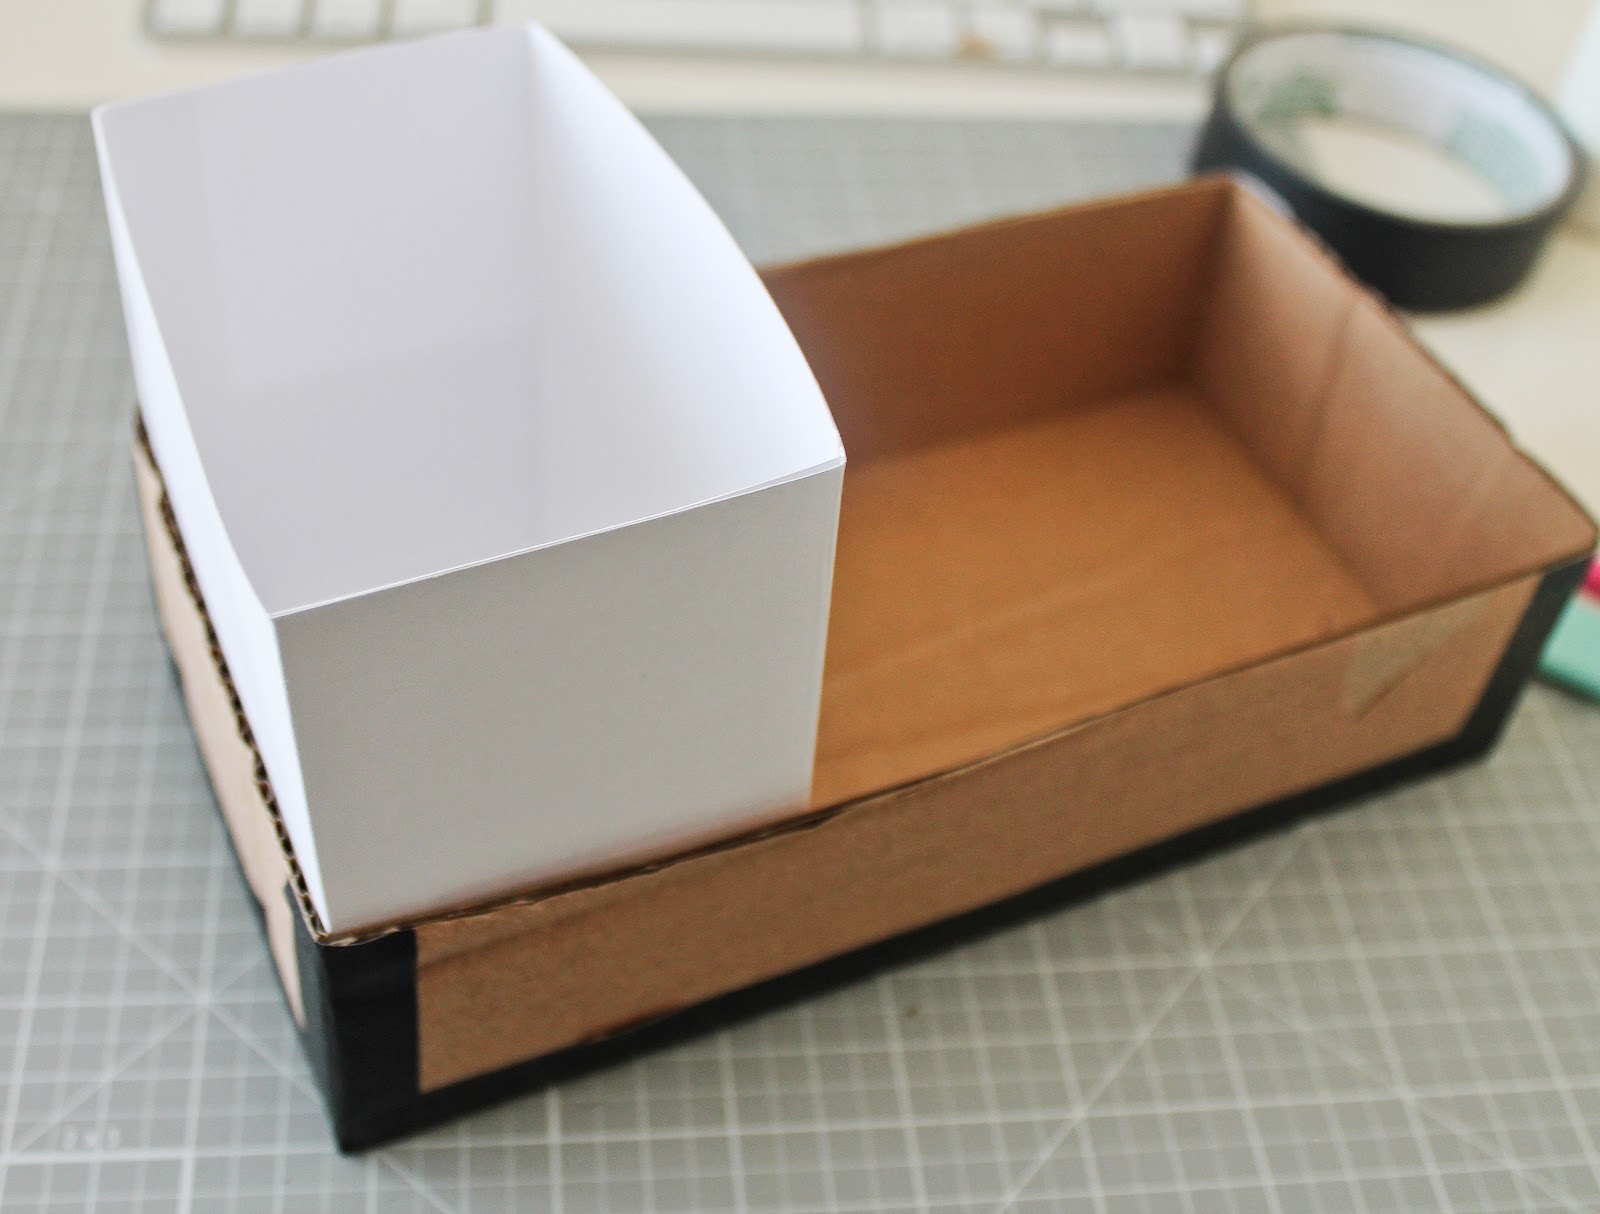 DIY: How to make Desk Organizer from Cardboard Box